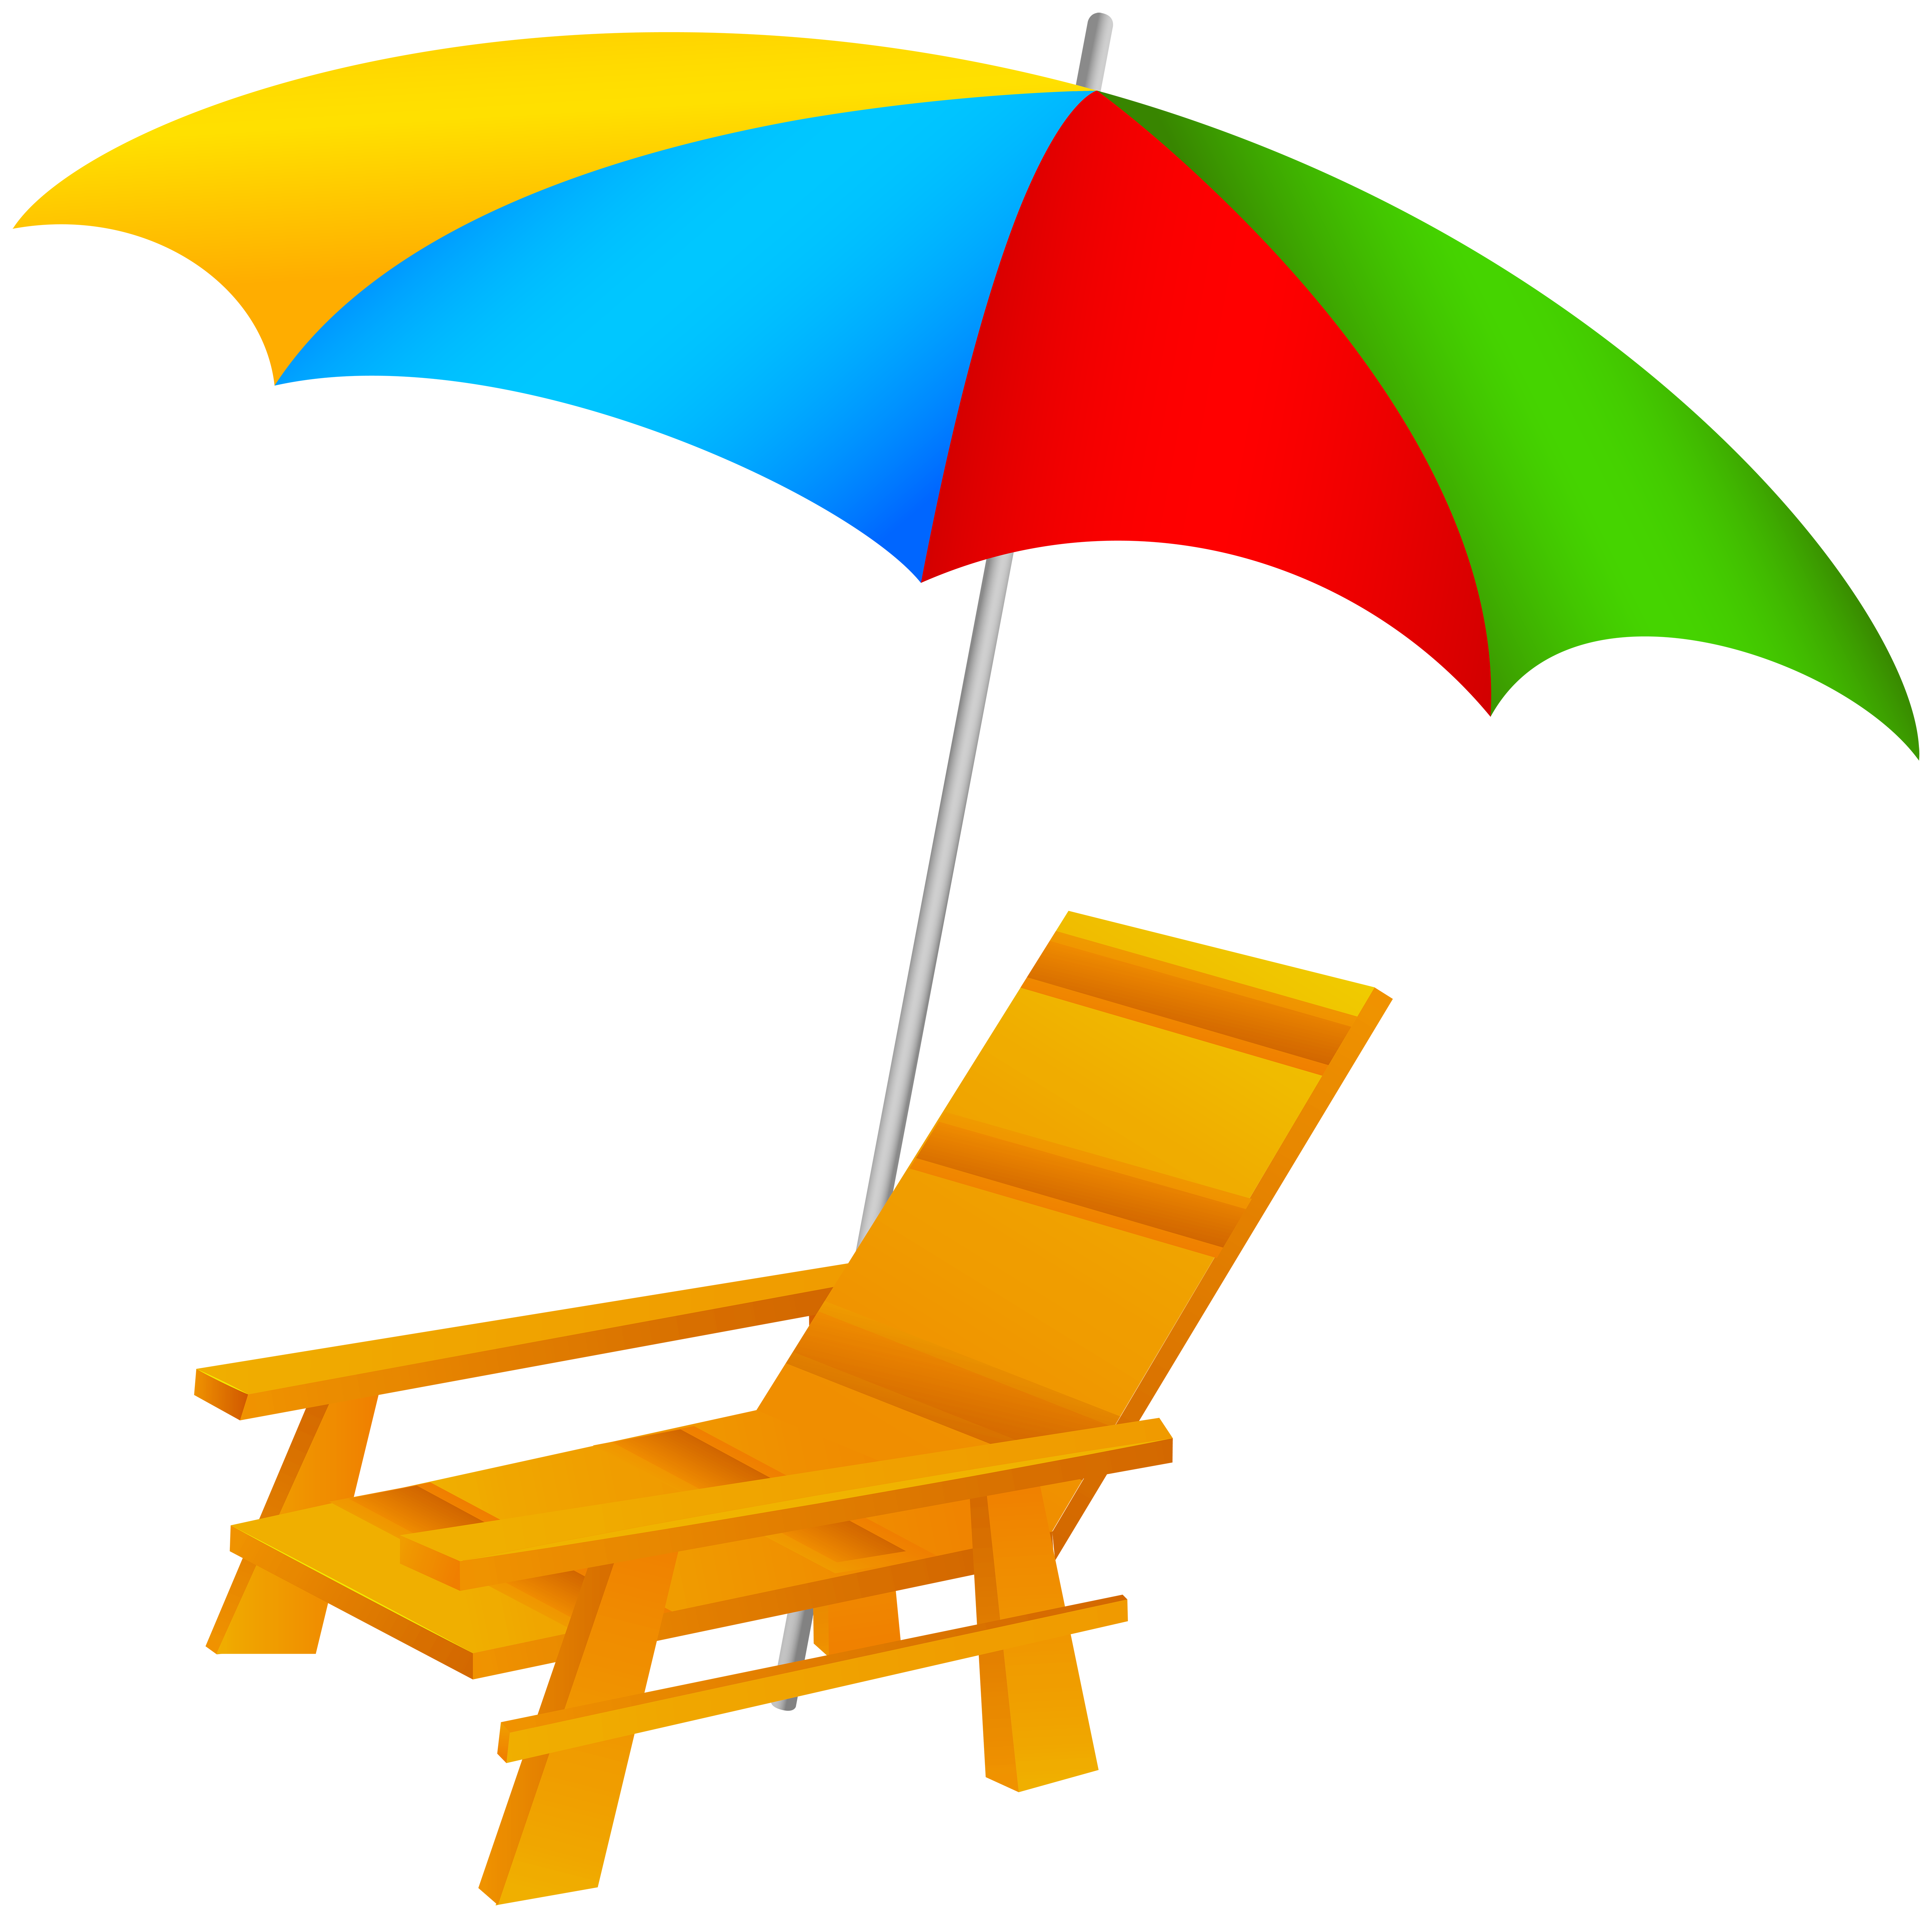 Beach and chair png. Clipart umbrella many umbrella